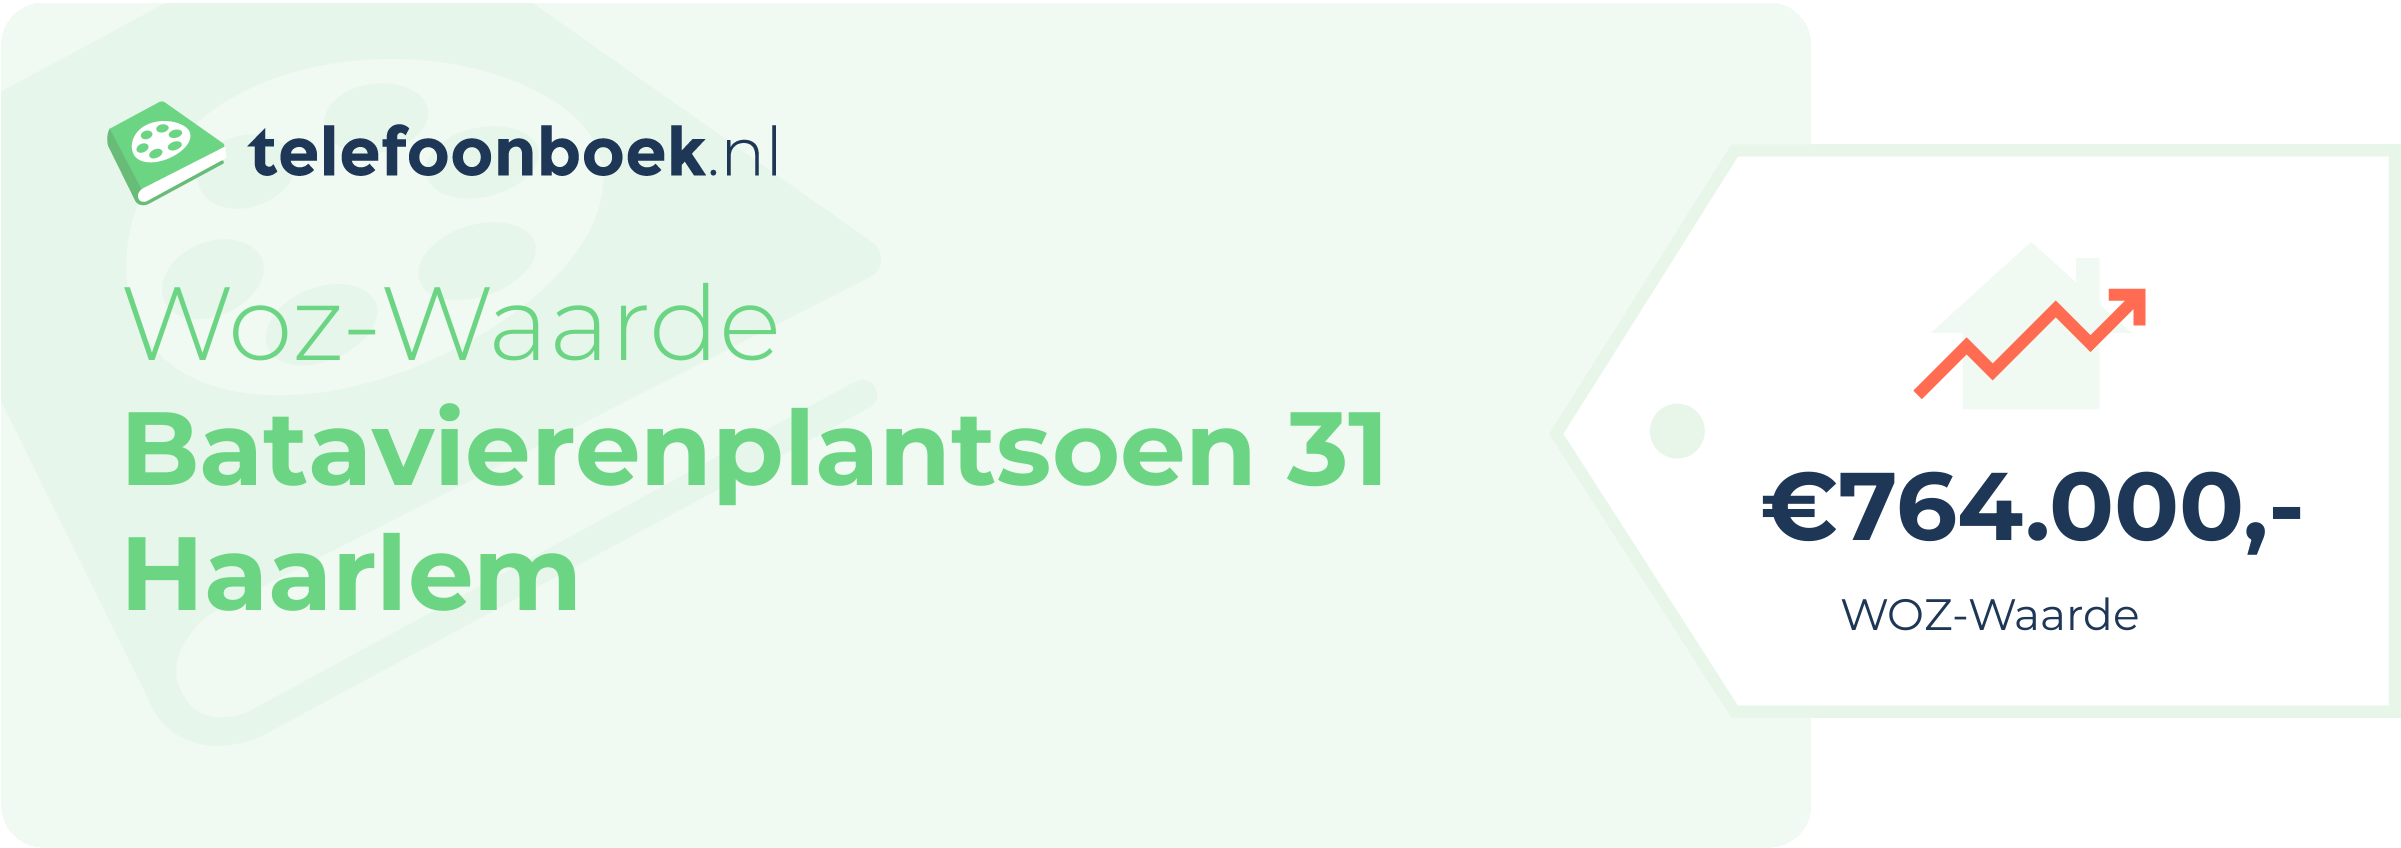 WOZ-waarde Batavierenplantsoen 31 Haarlem